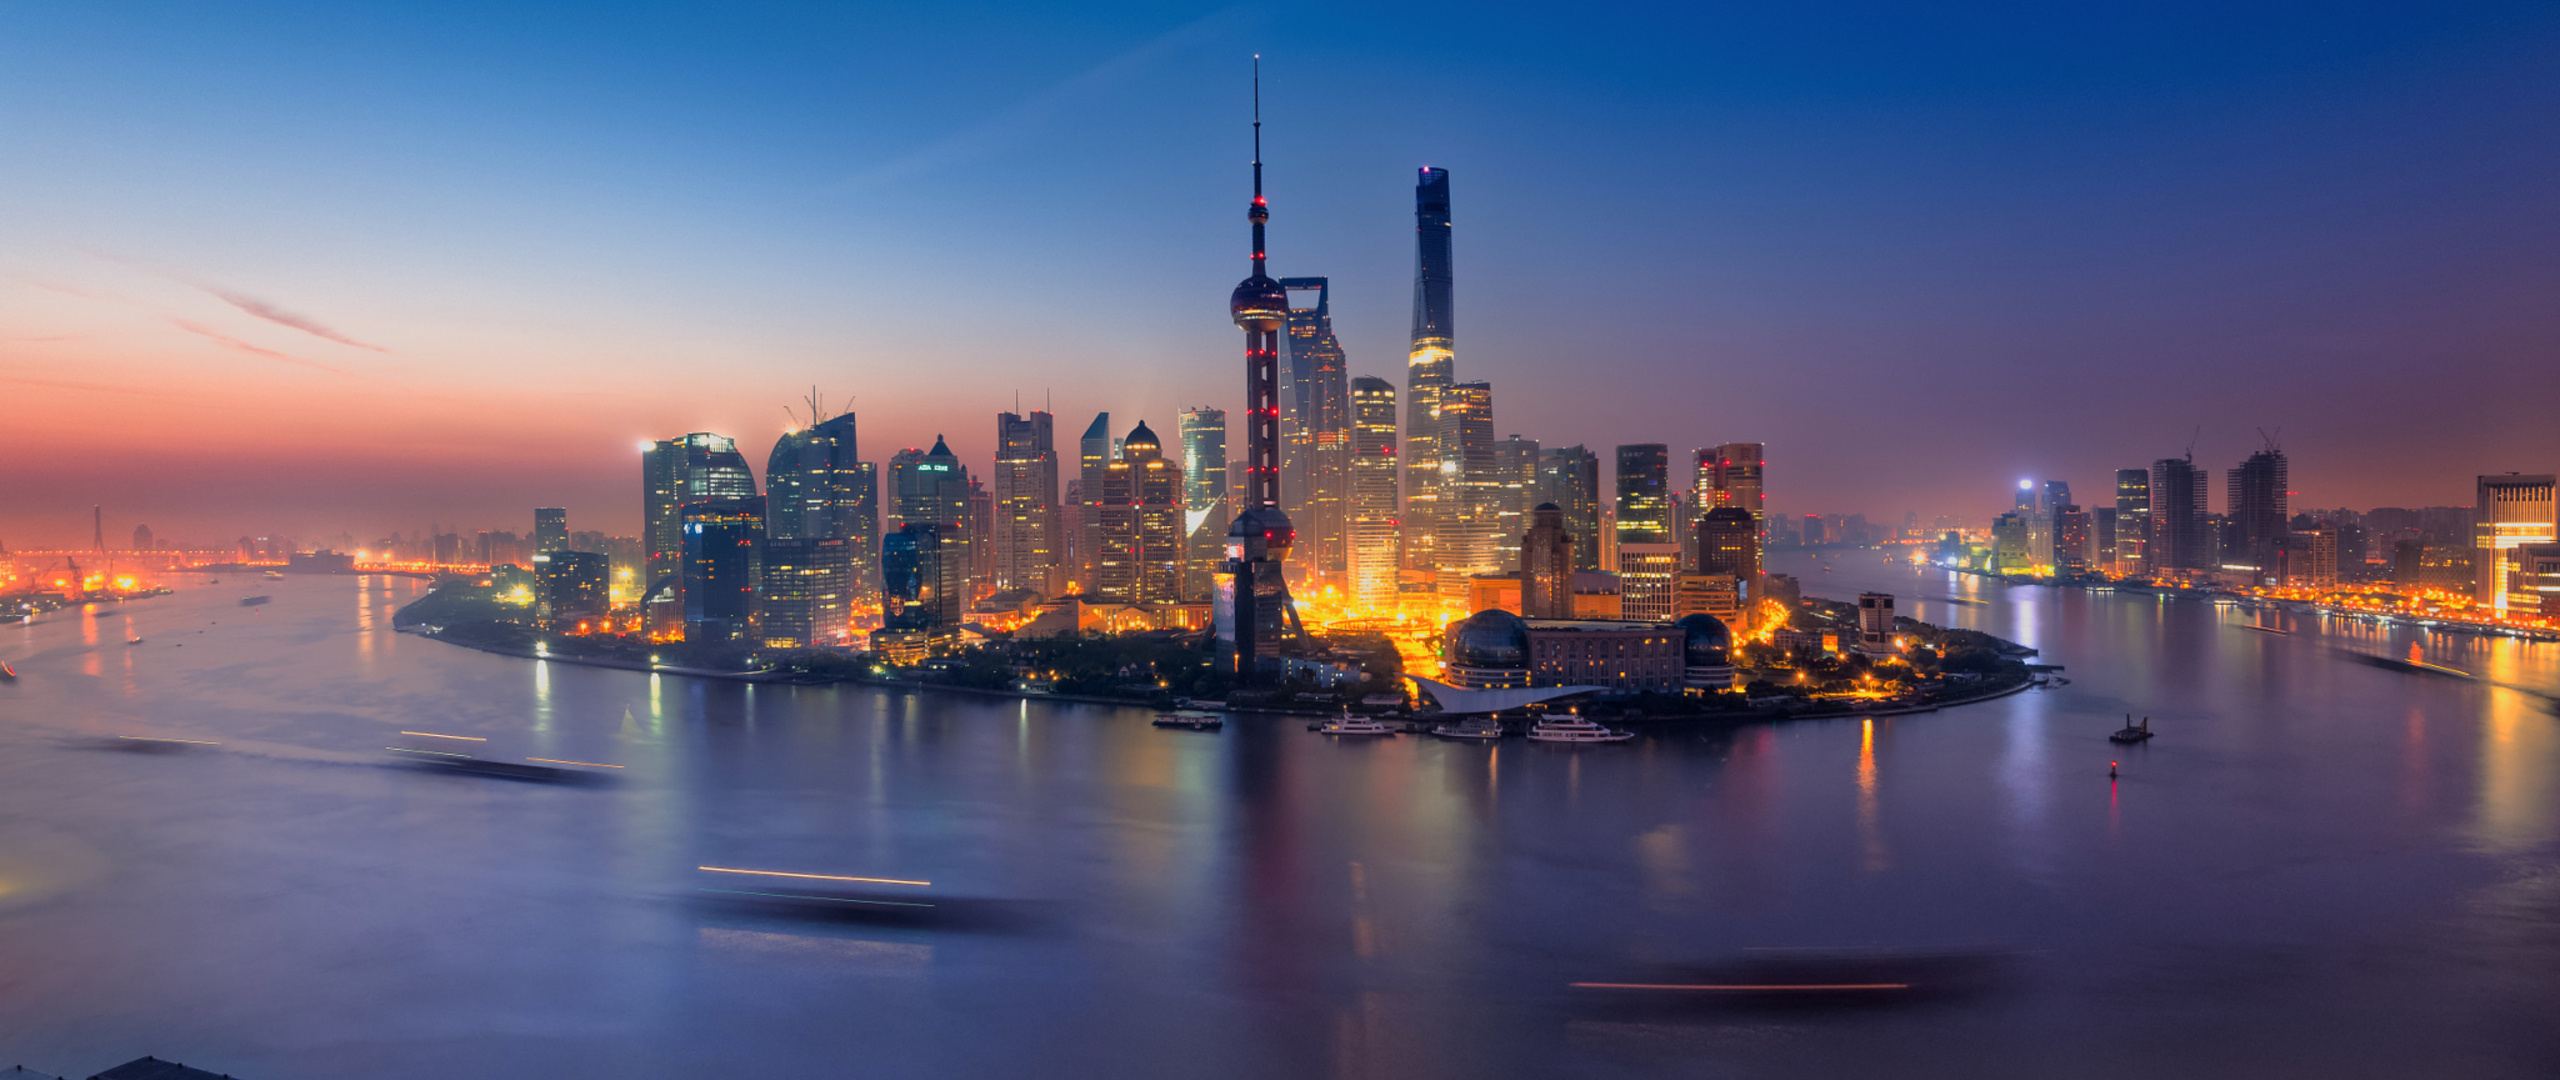 Shanghai Skyline, China buildings, City lights, HD wallpapers, 2560x1080 Dual Screen Desktop